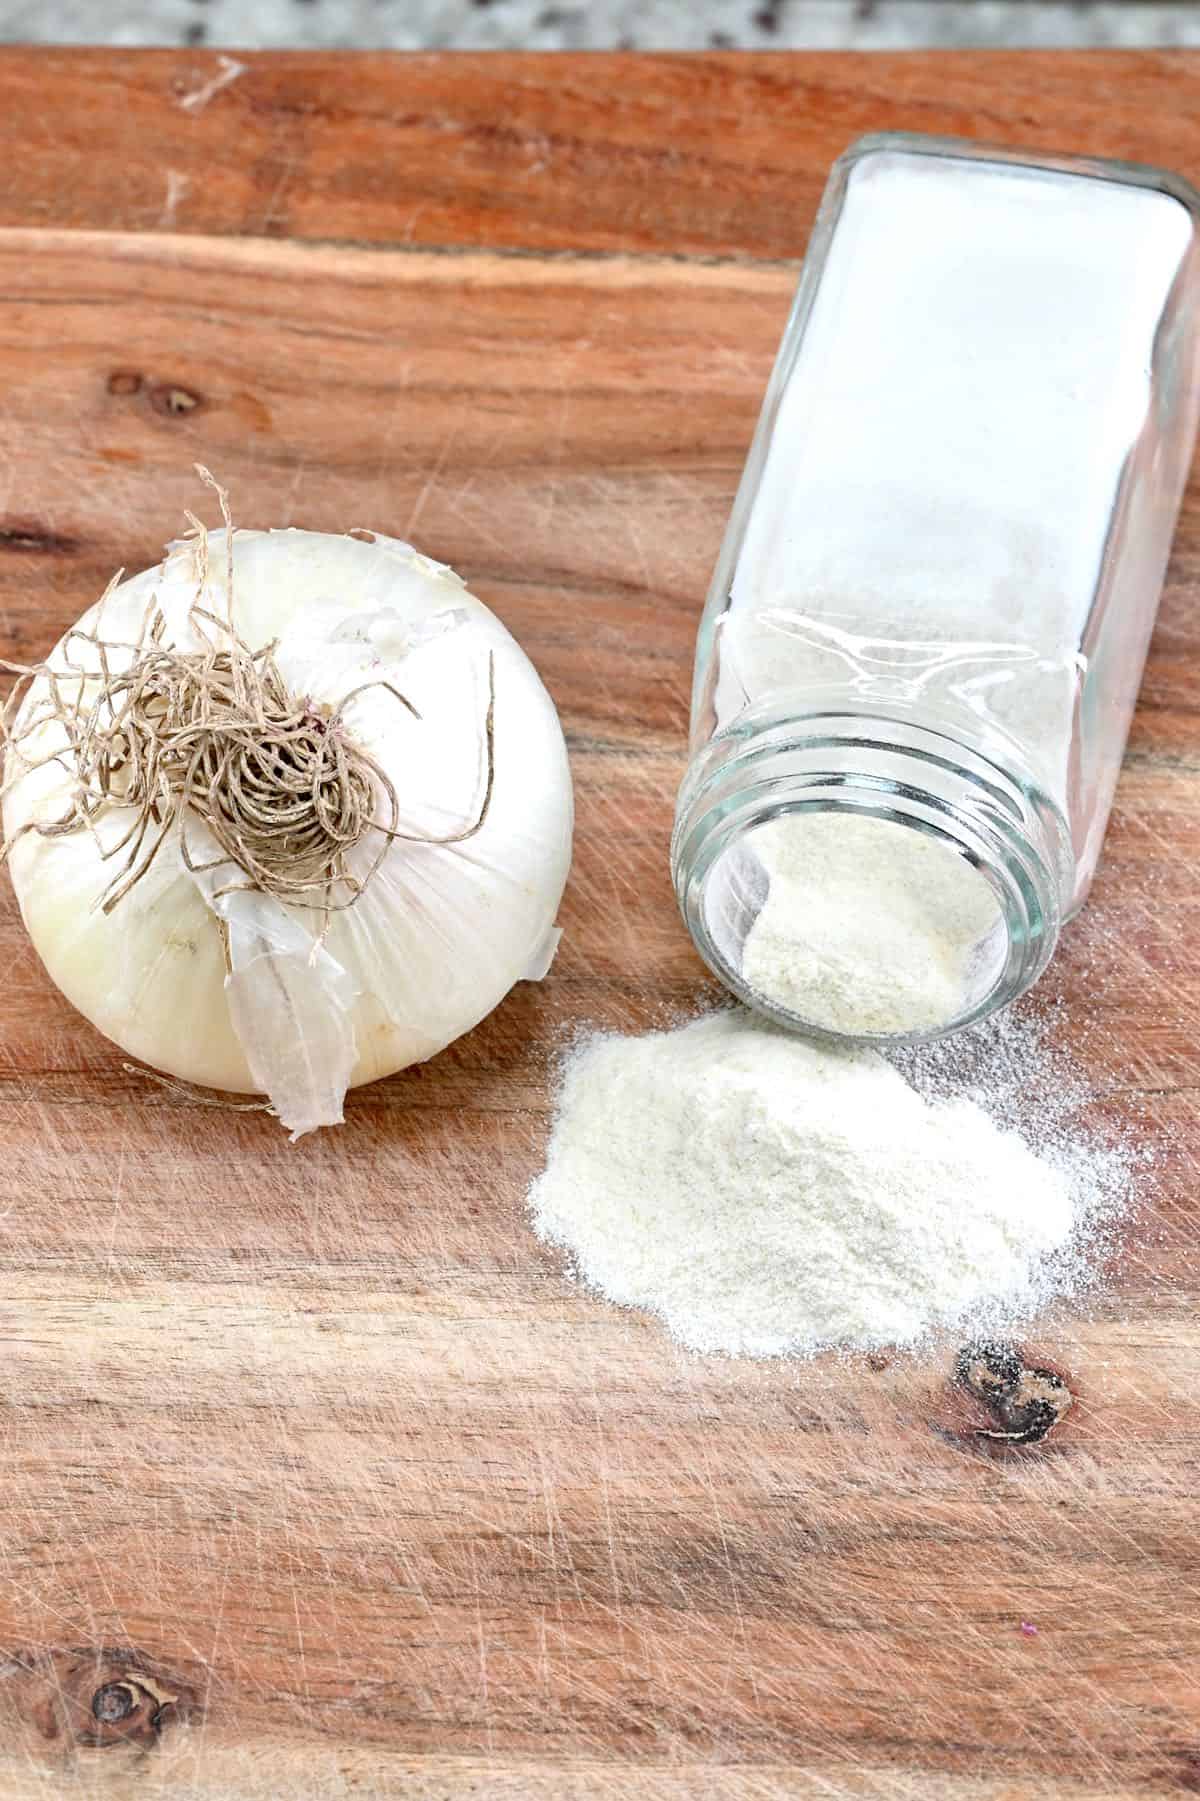 Onion powder spilling from a jar